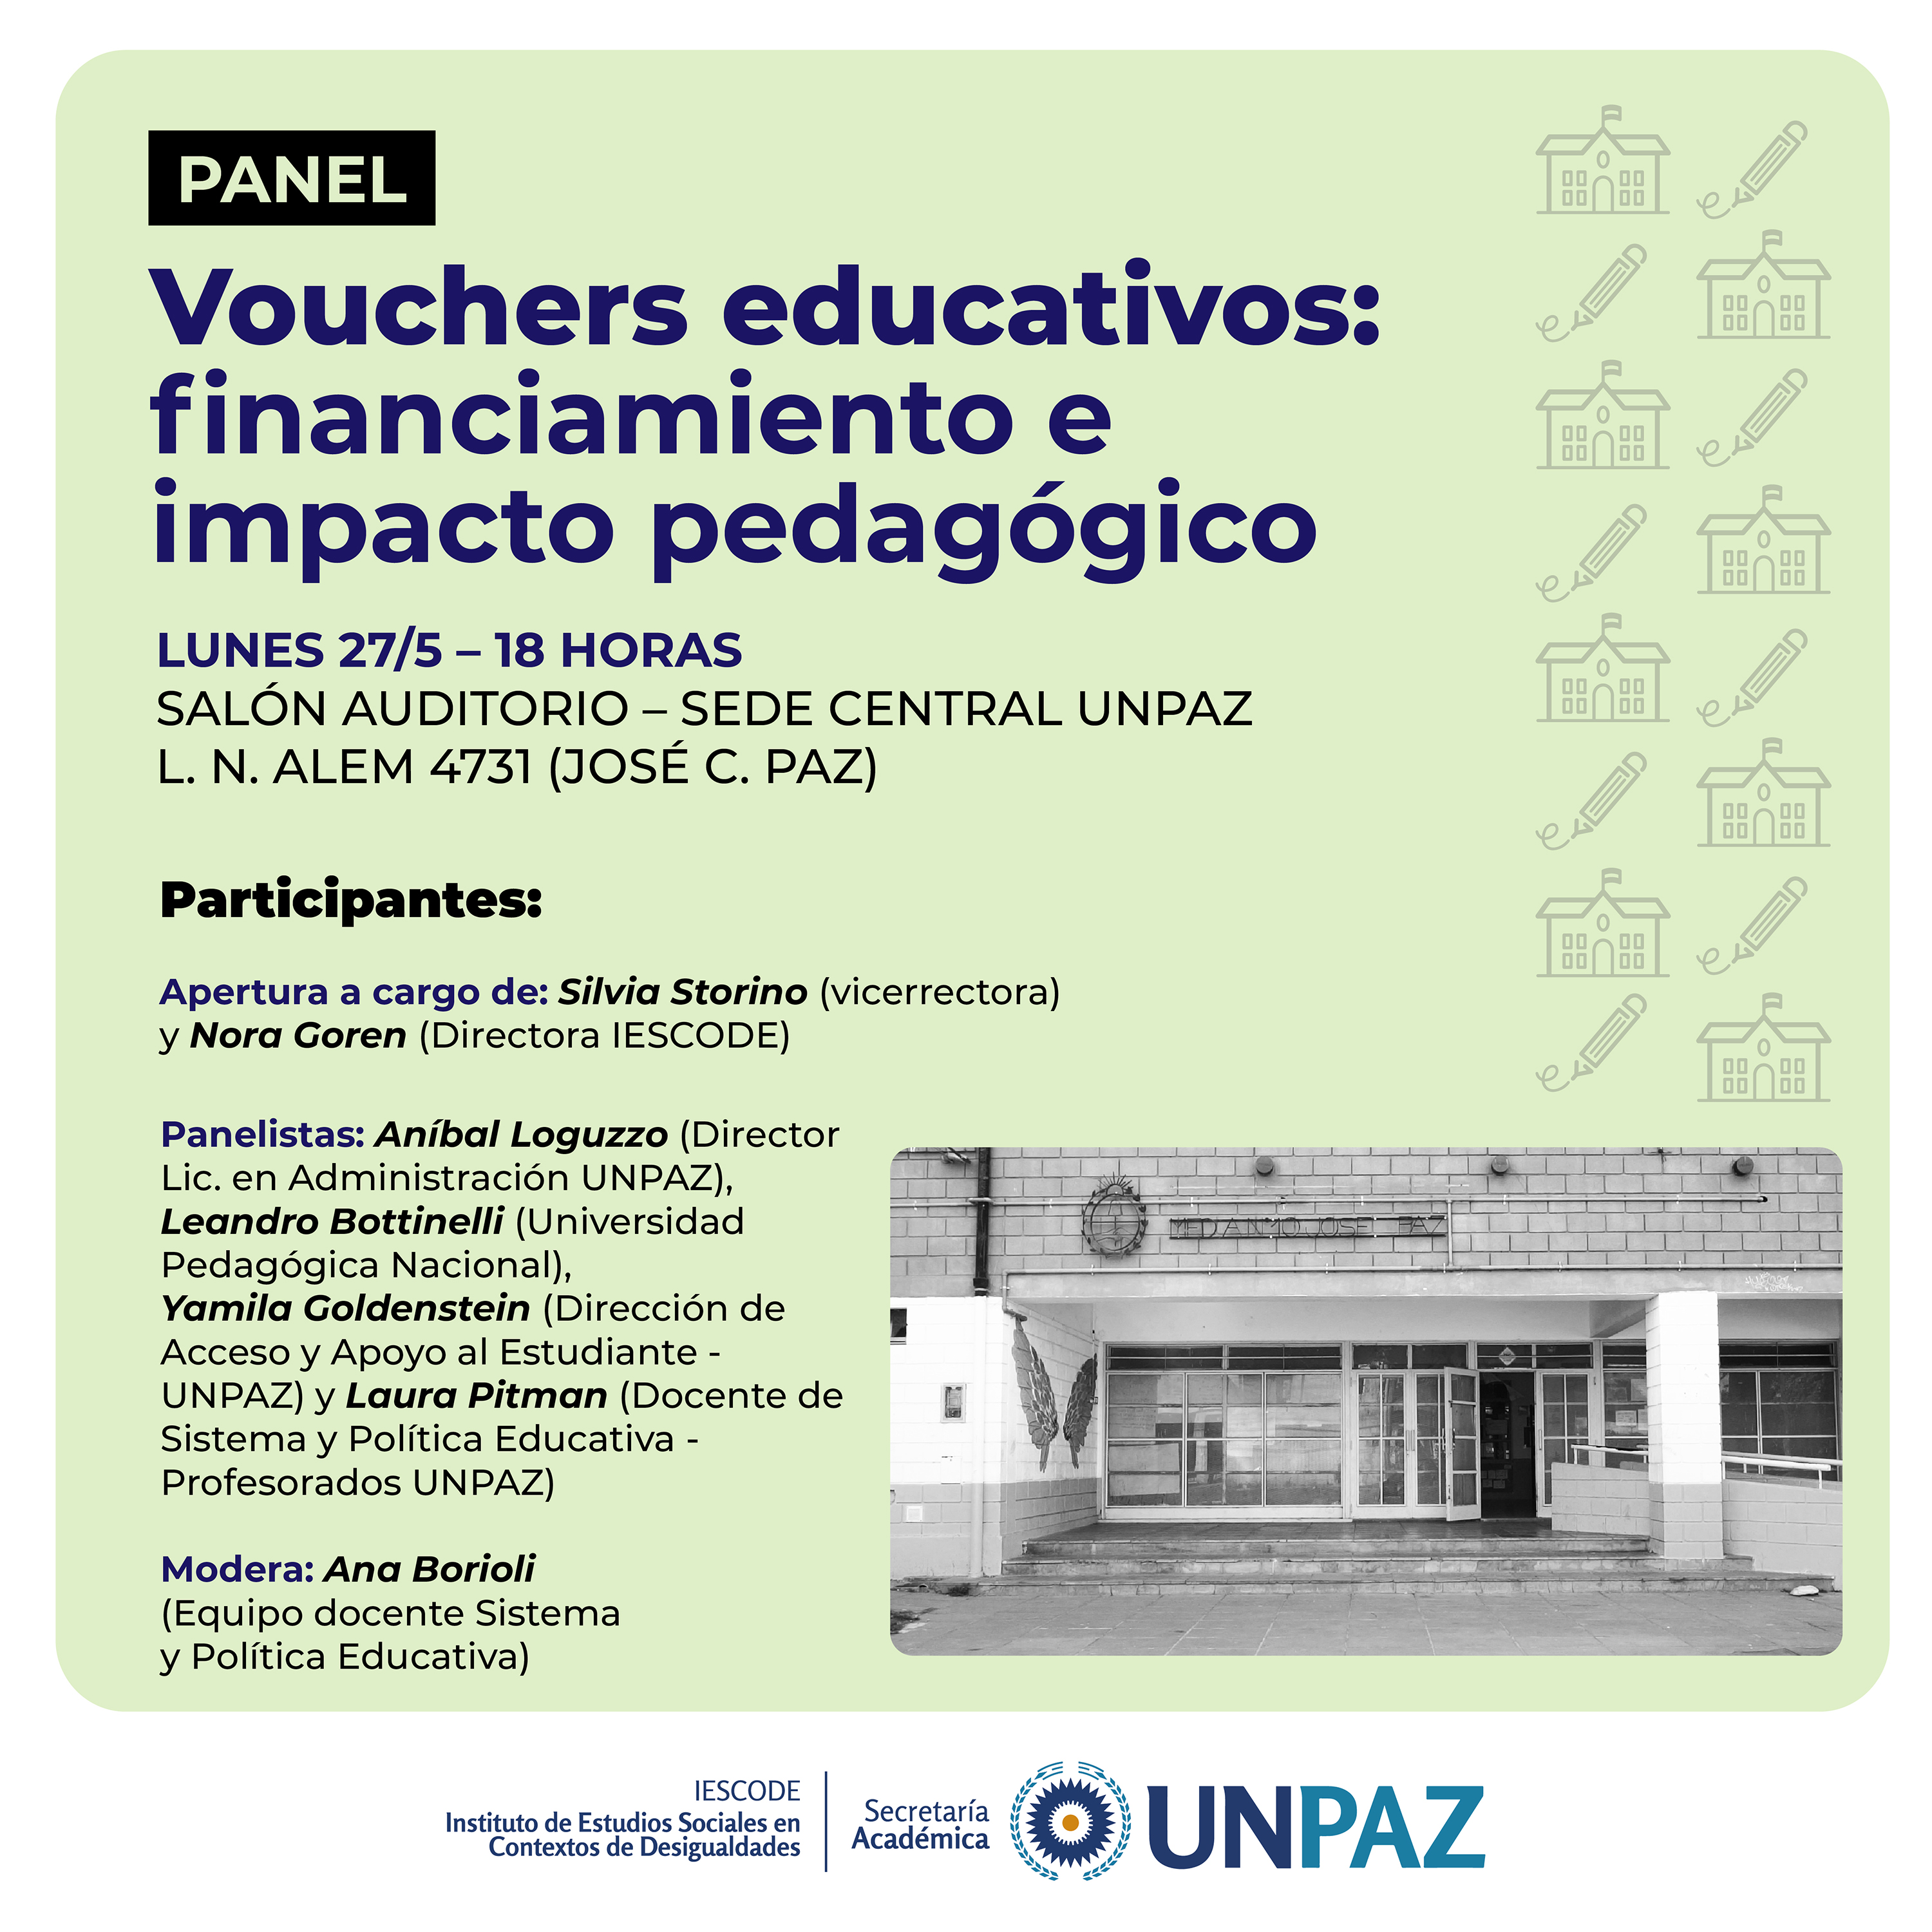 Panel “Vouchers educativos: financiamiento e impacto pedagógico”